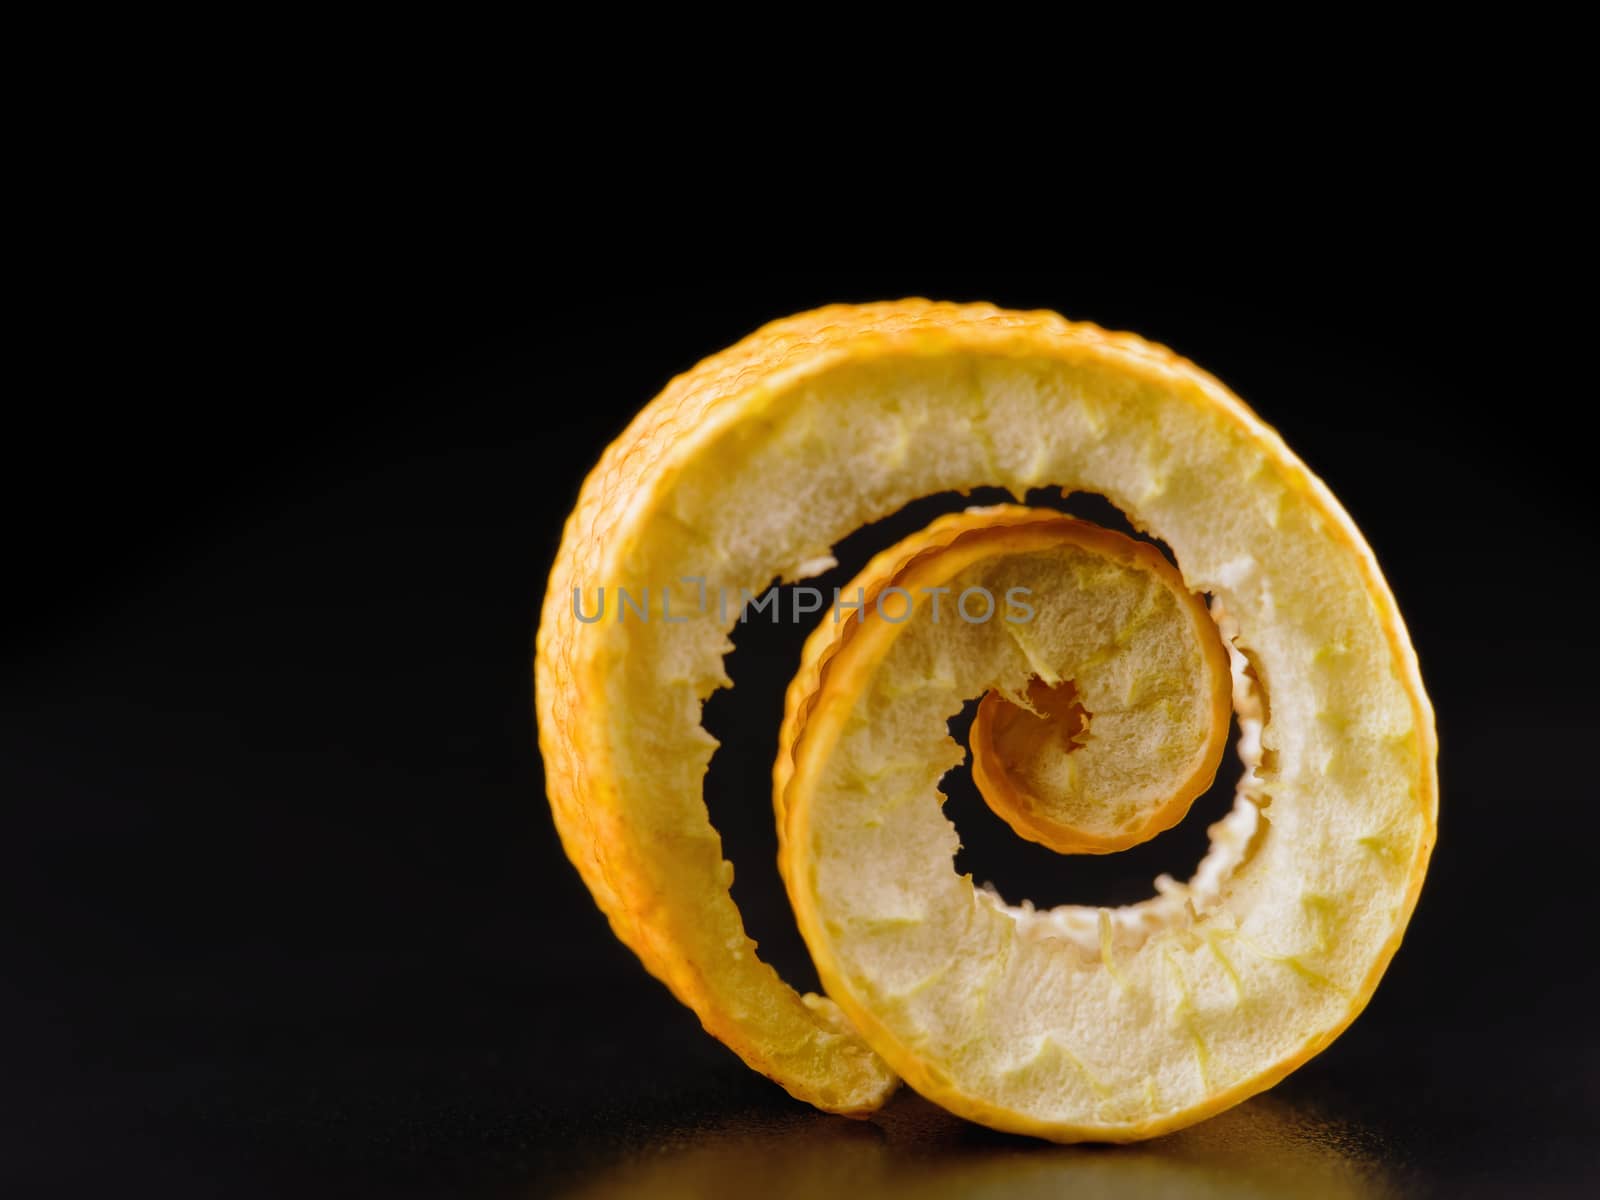 twist of citrus peel on a black background